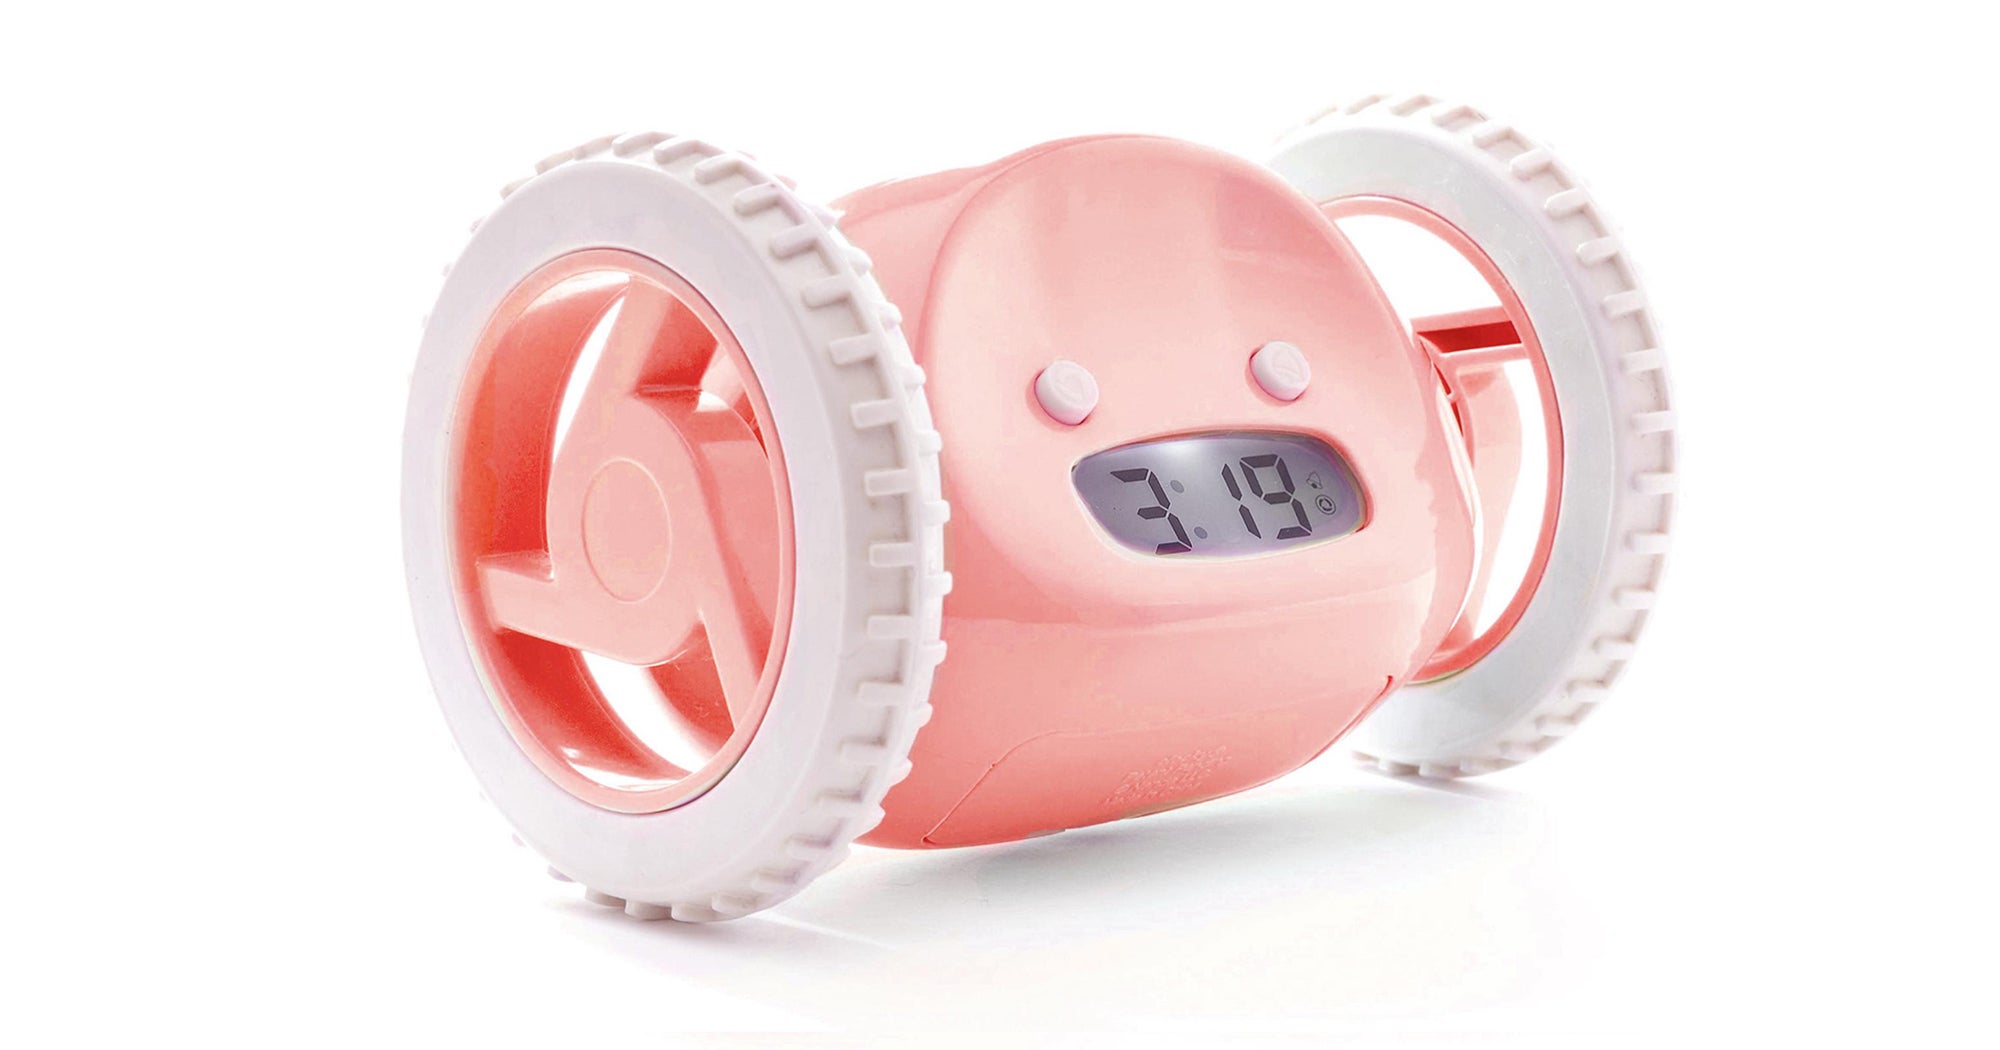 best alarm clock for deep sleepers